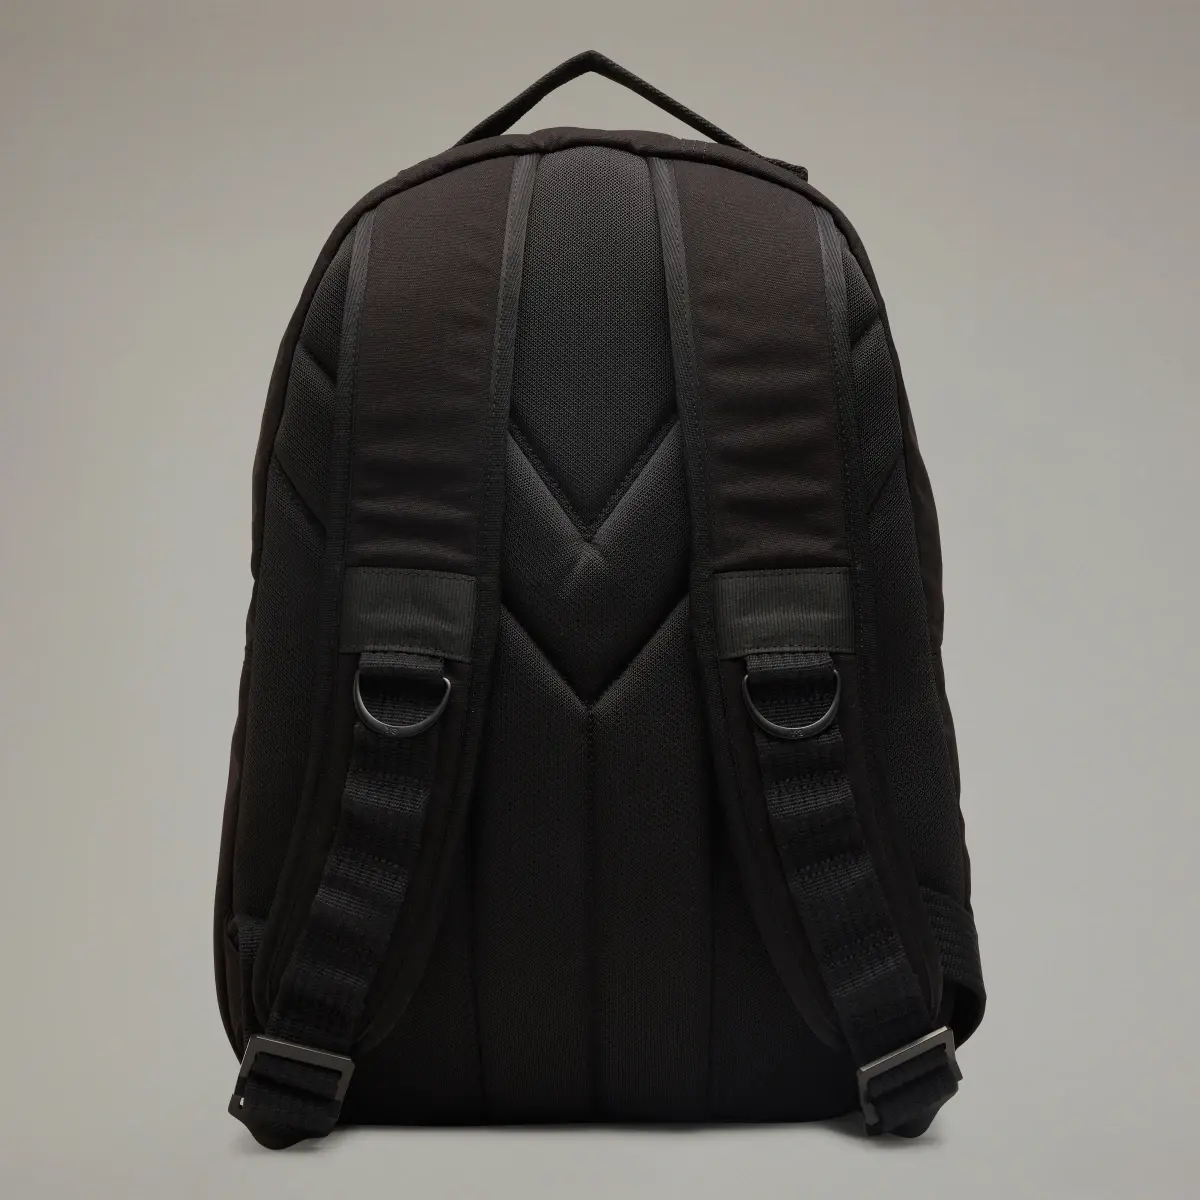 Adidas Y-3 Classic Backpack. 3